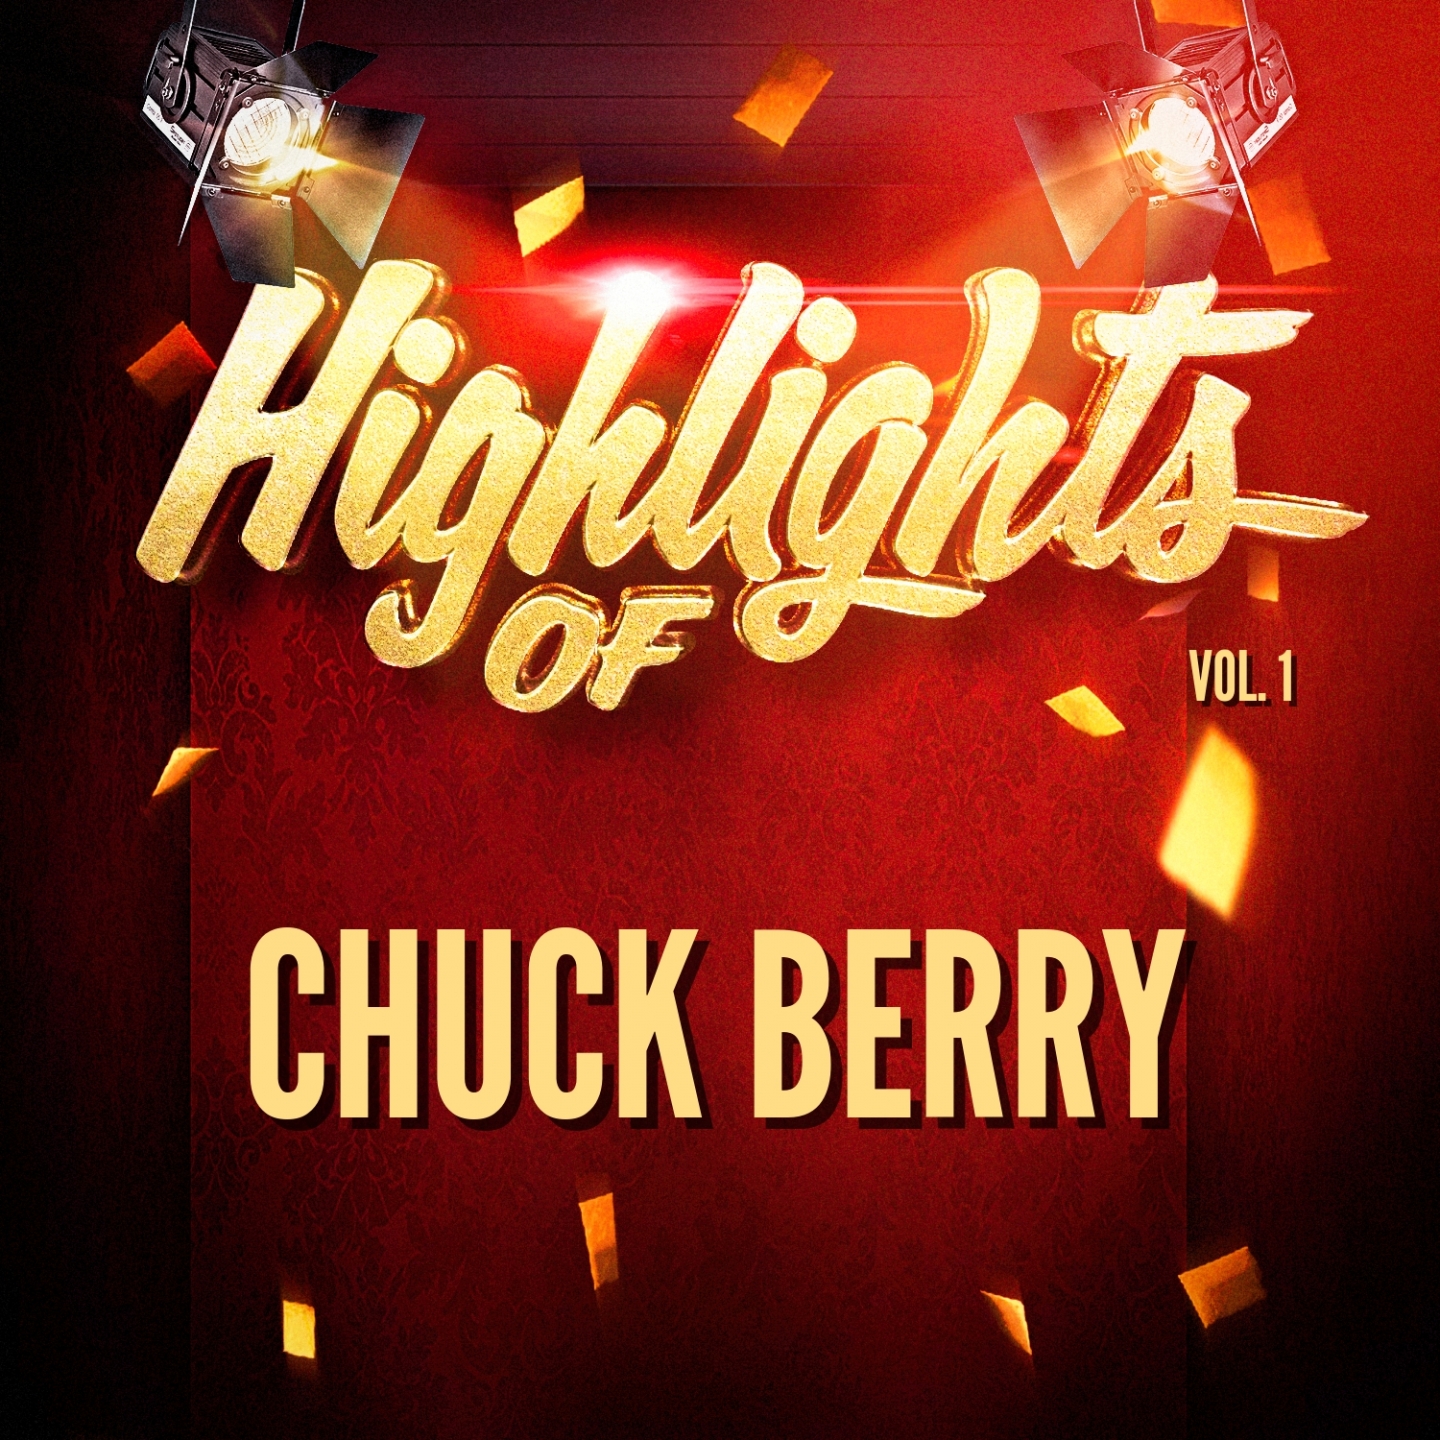 Highlights of Chuck Berry, Vol. 1